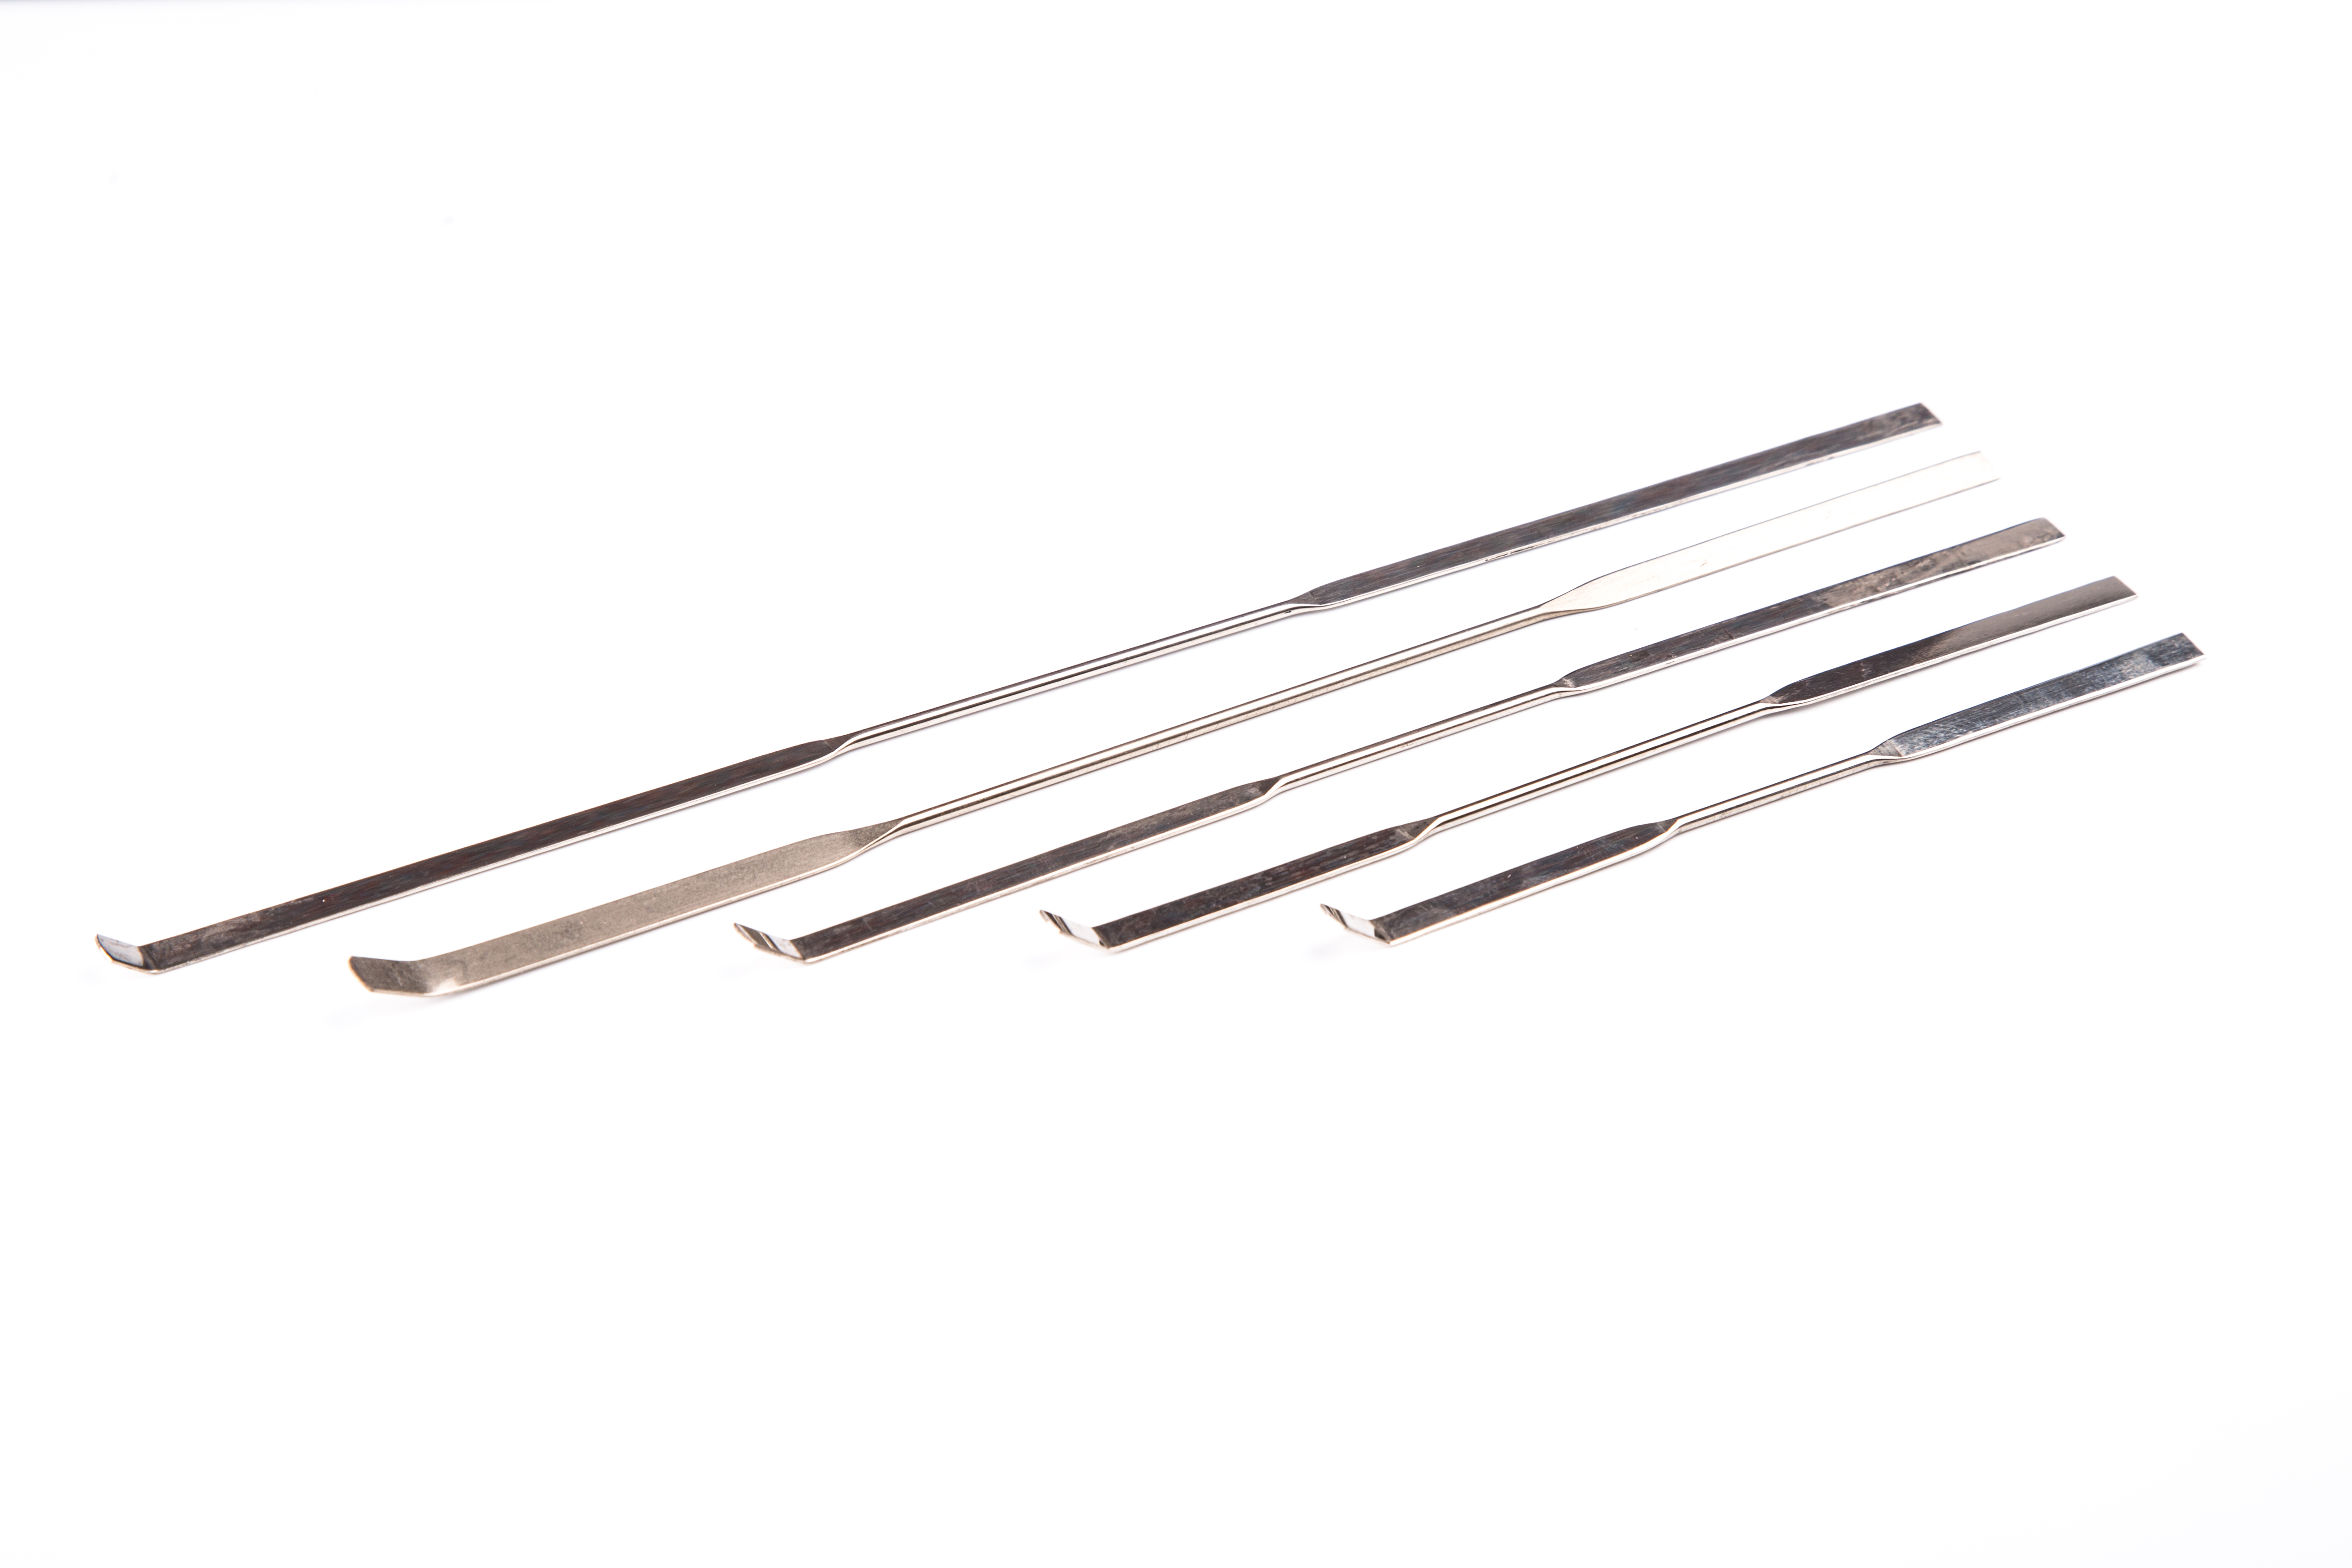 Stainless steel spatula, Chattaway pattern (Micro), 150mm